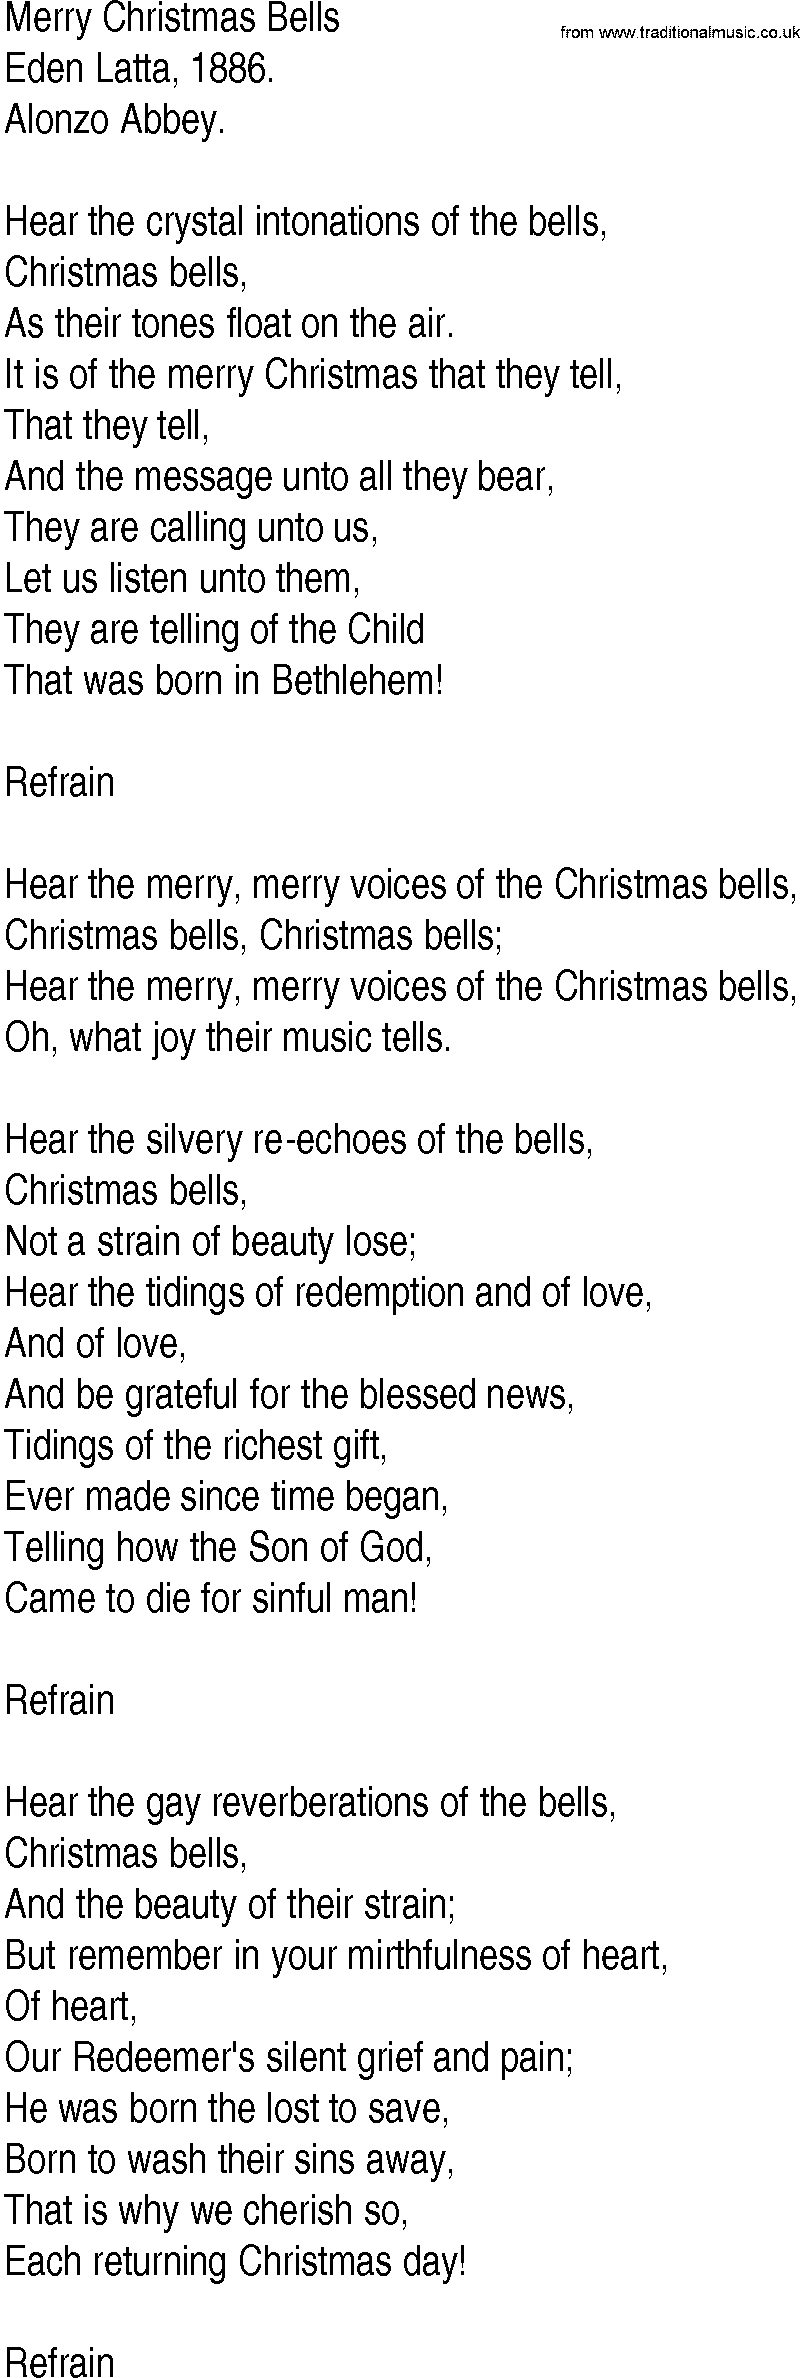 Hymn and Gospel Song: Merry Christmas Bells by Eden Latta lyrics